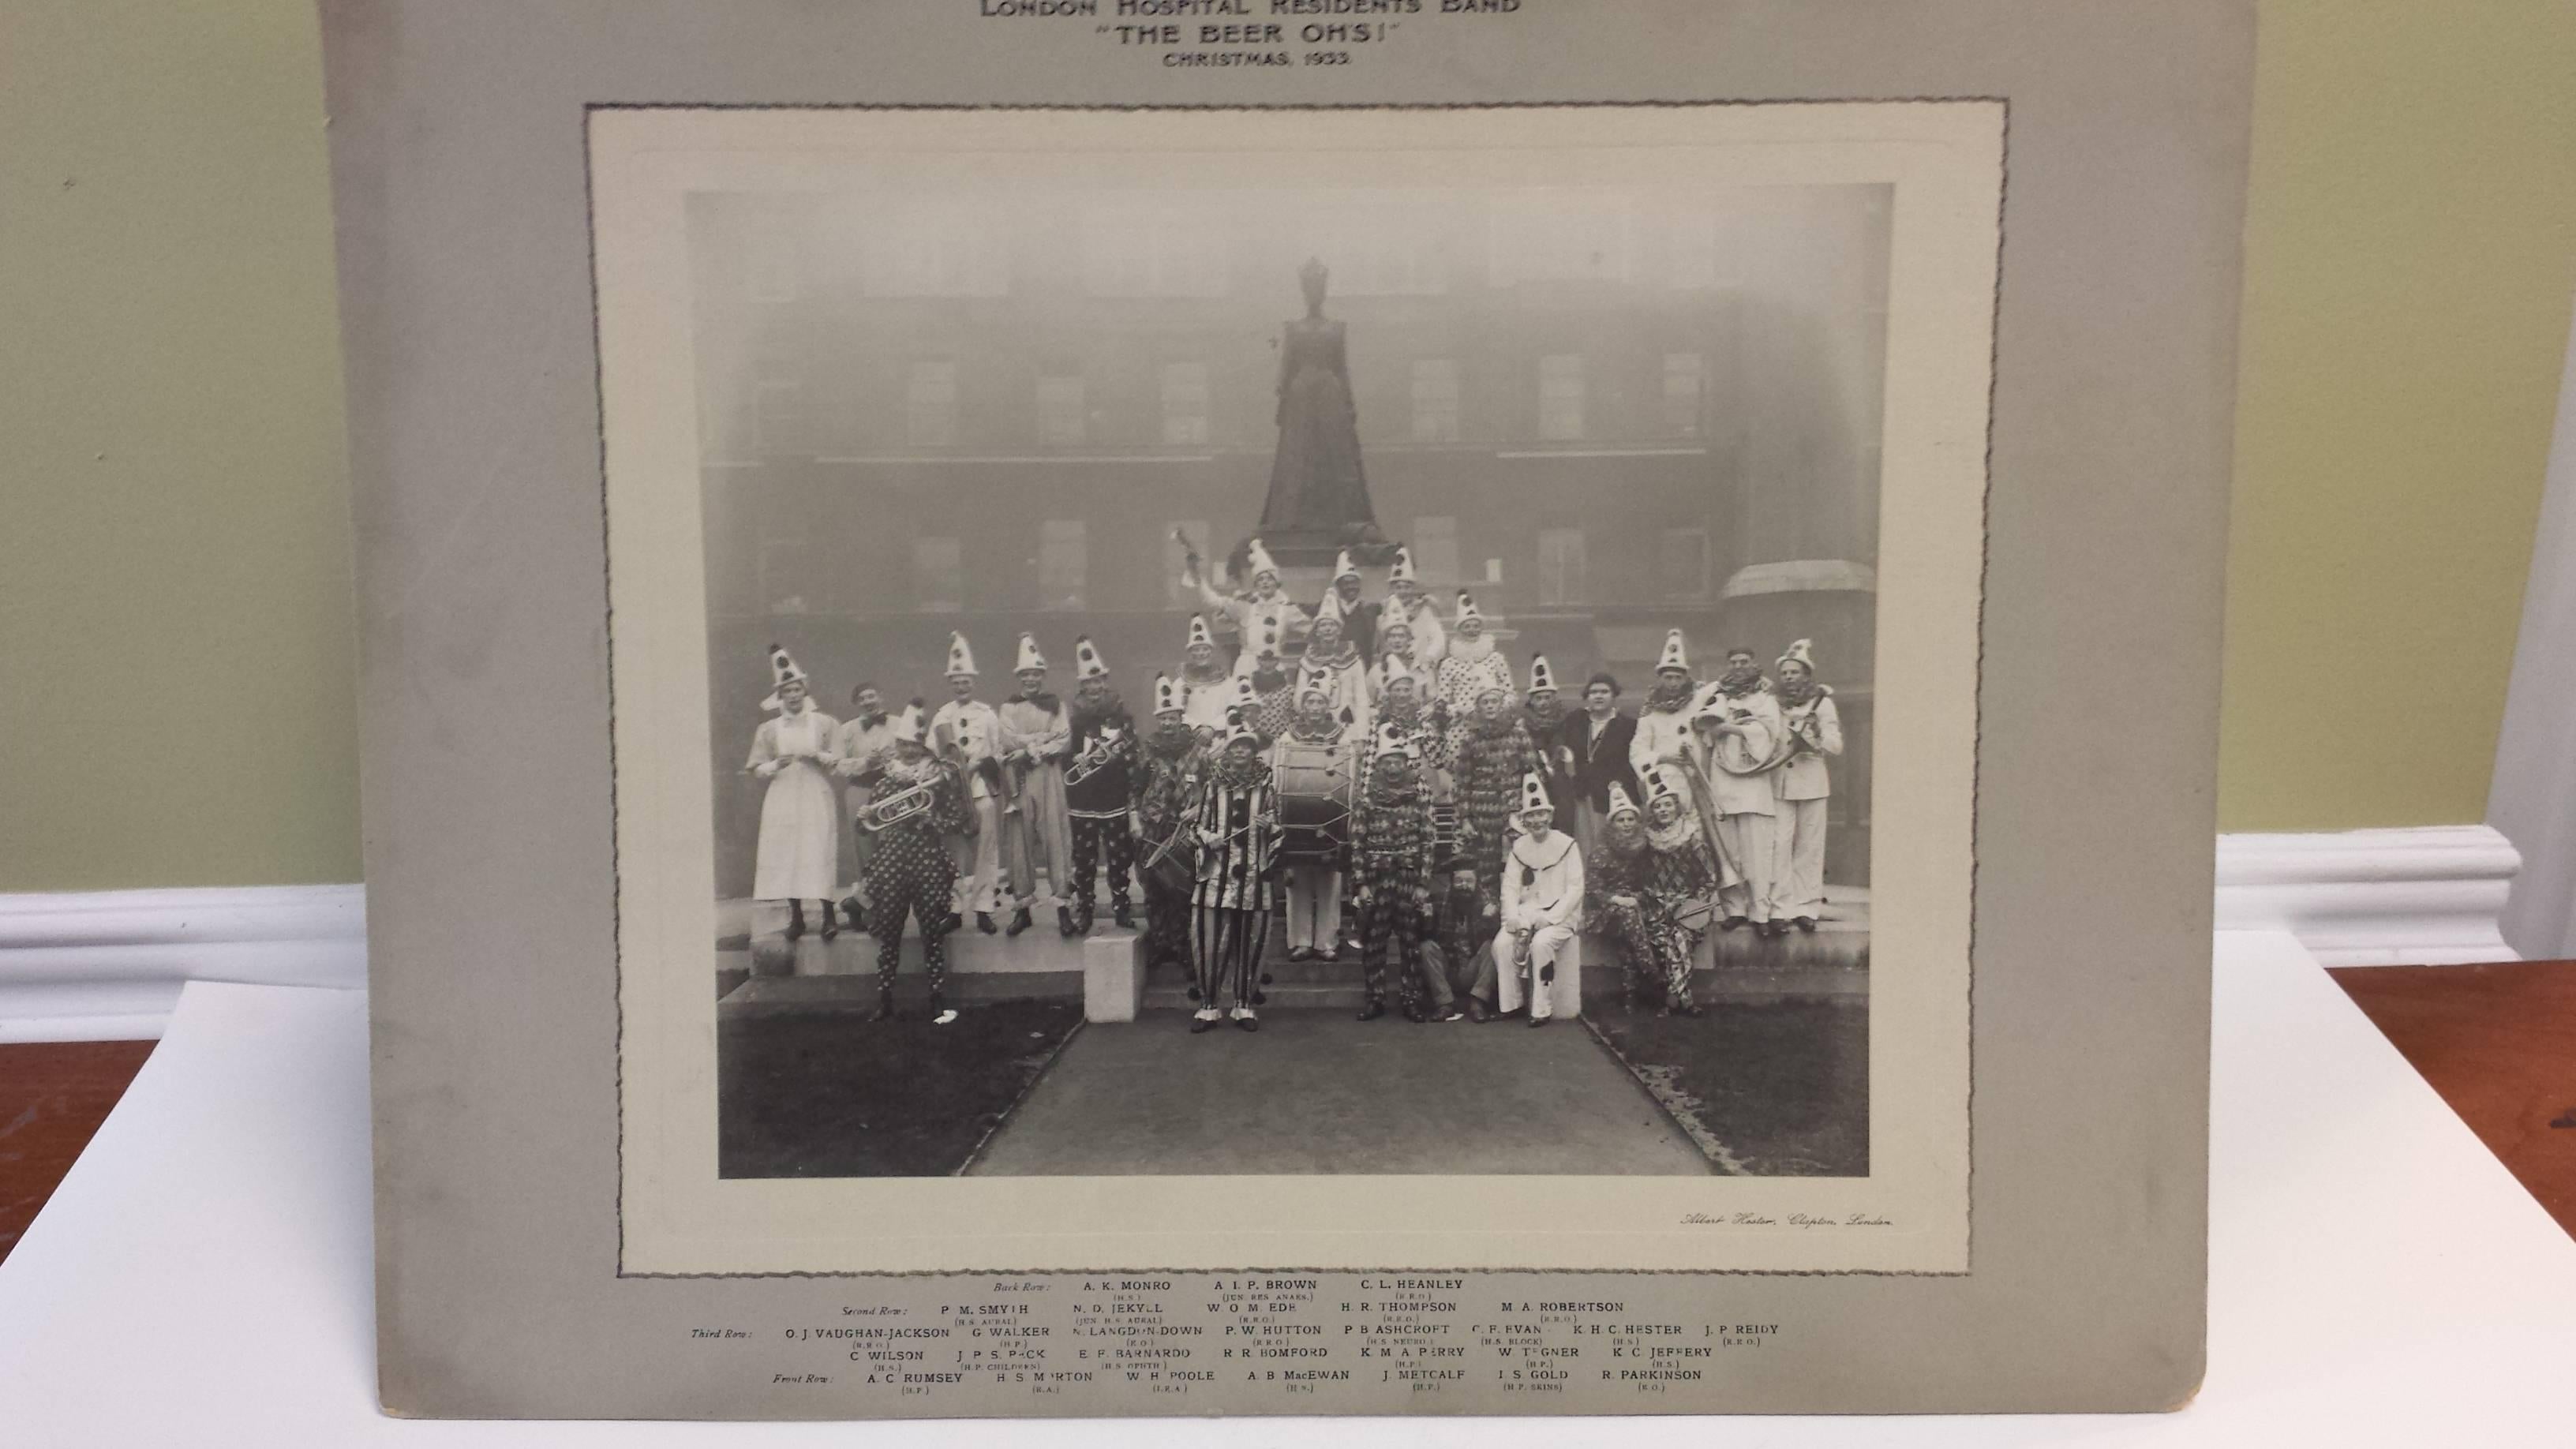 Albert Hester Photograph 1933 Clapton London, London Hospital Residents Band 2